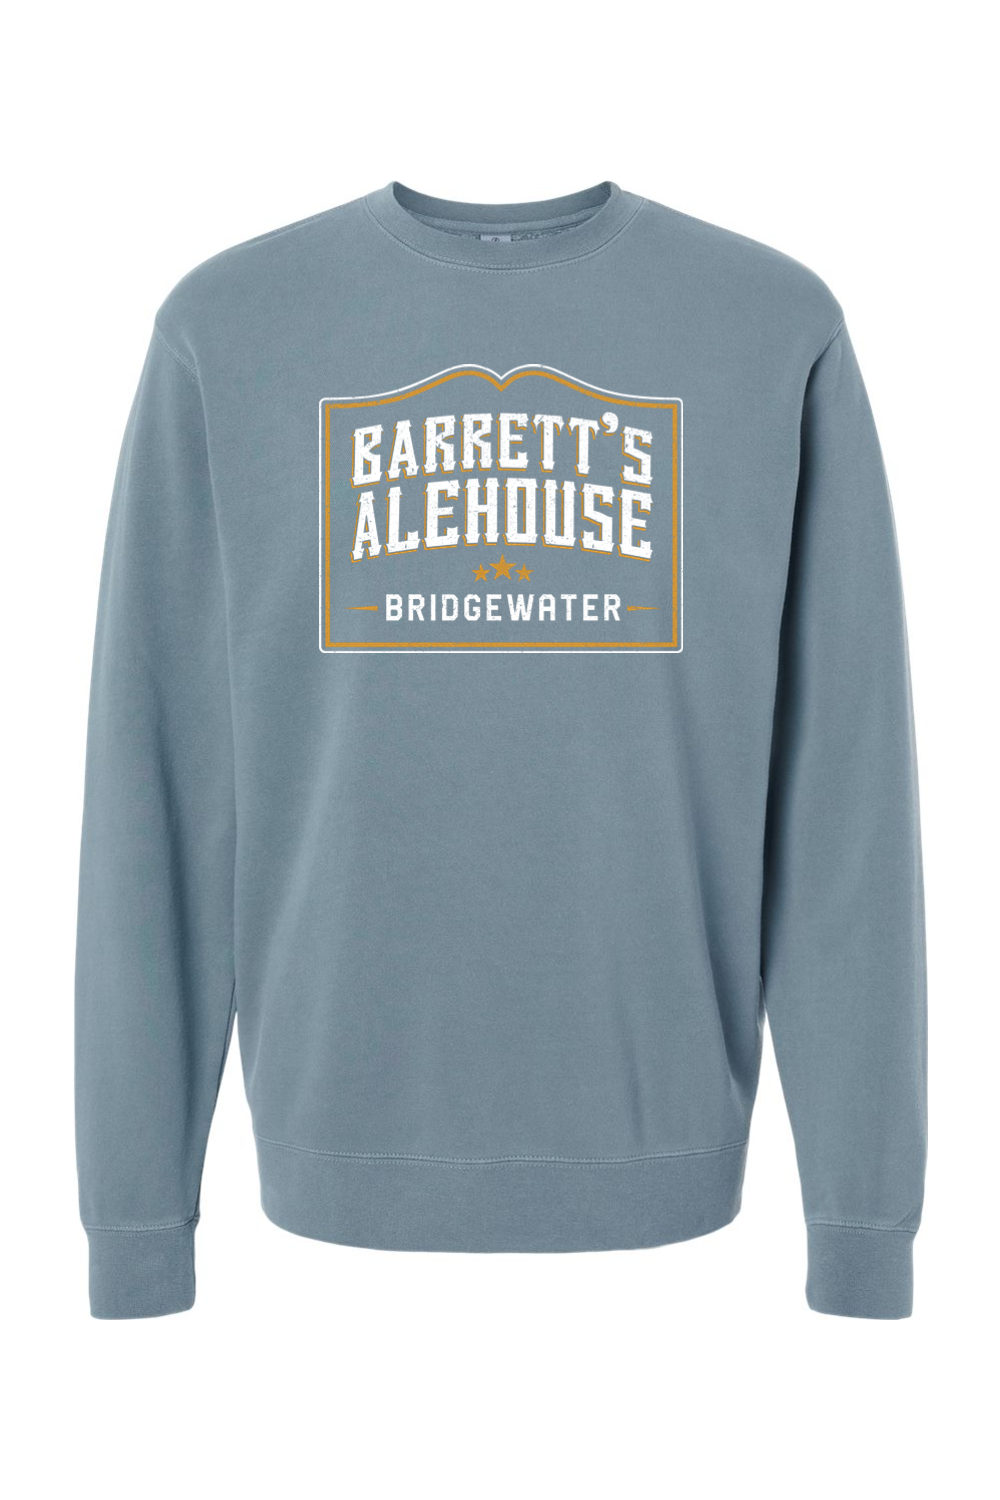 Barrett's Alehouse Bridgewater Pigment Dyed Crewneck Sweatshirt